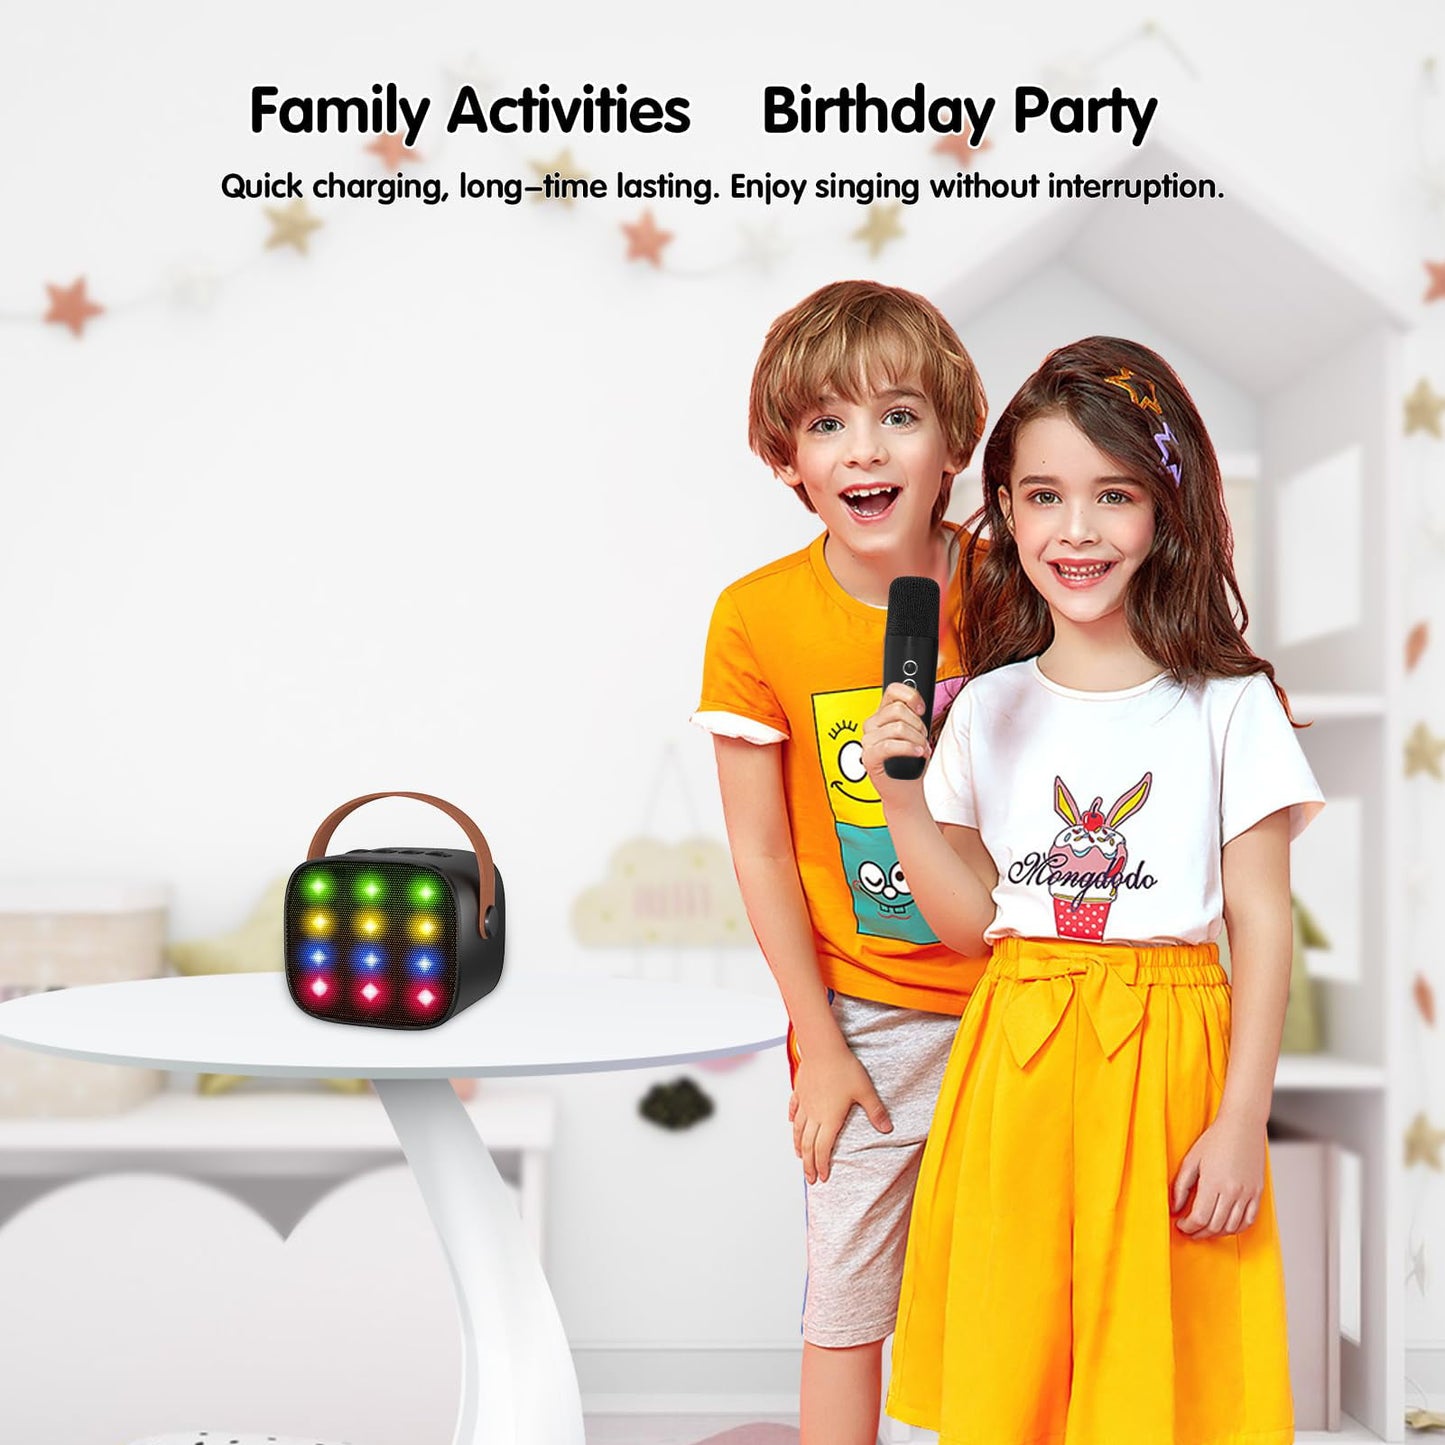 BONAOK Mini Karaoke Machine for Kids Adults, Portable Bluetooth Speaker with 2 Wireless Microphone, Karaoke Singing Gifts Toys (Pink)